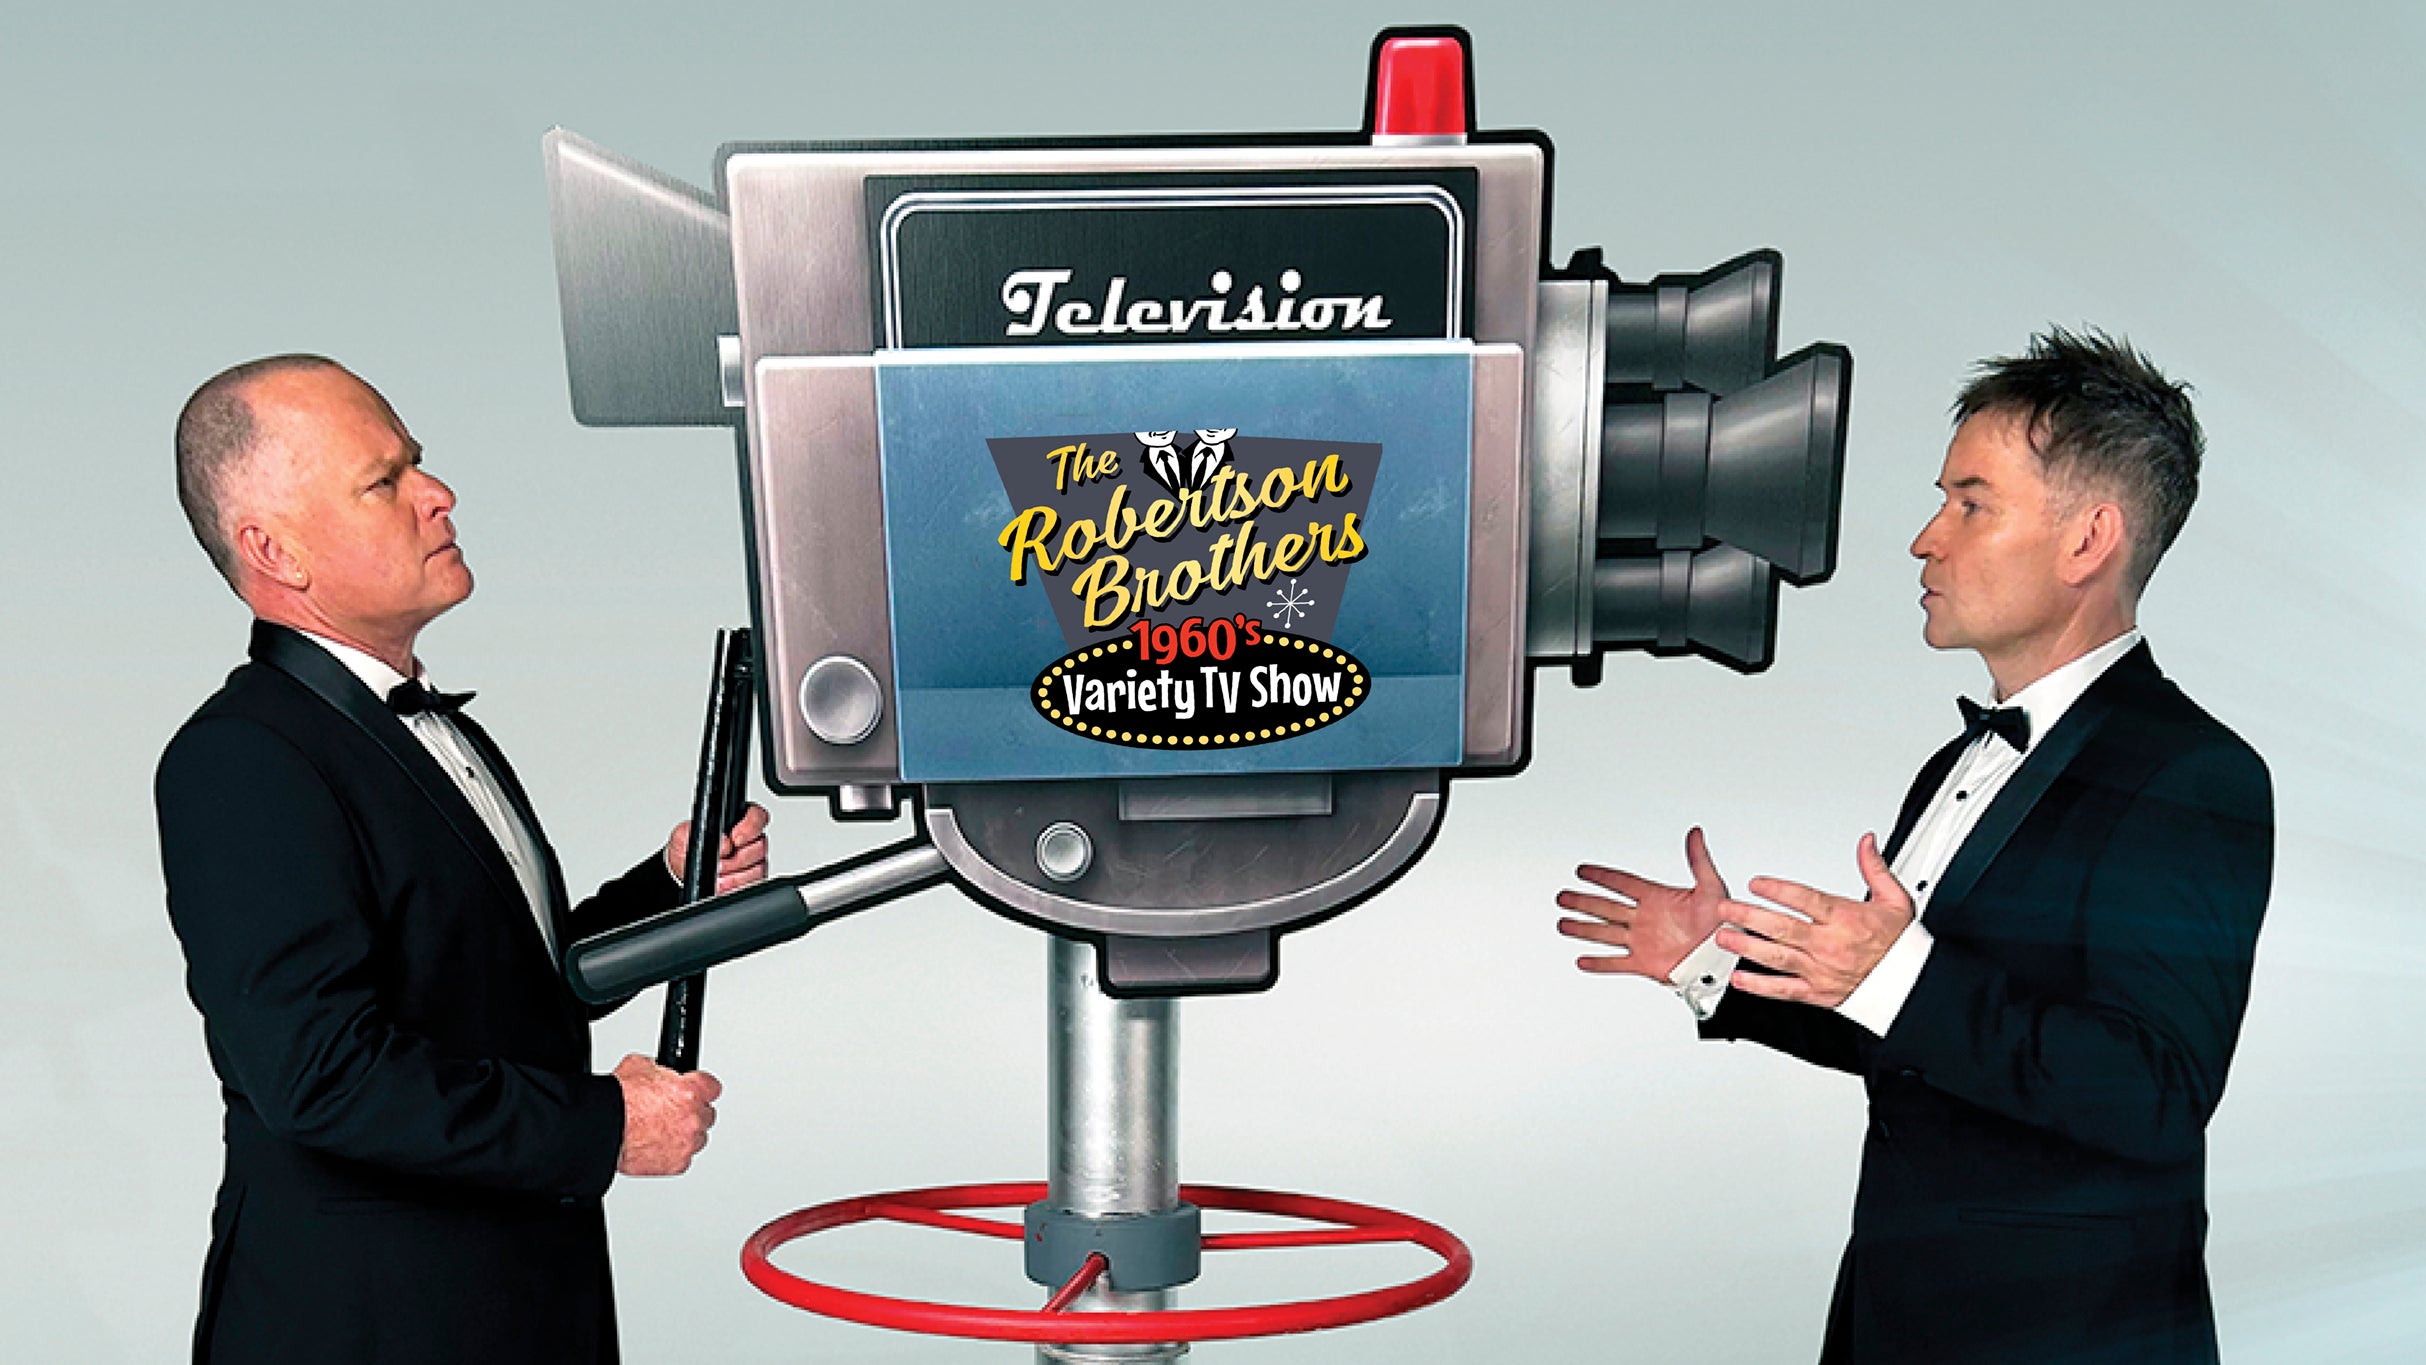 The Robertson Brothers Variety Show presale information on freepresalepasswords.com